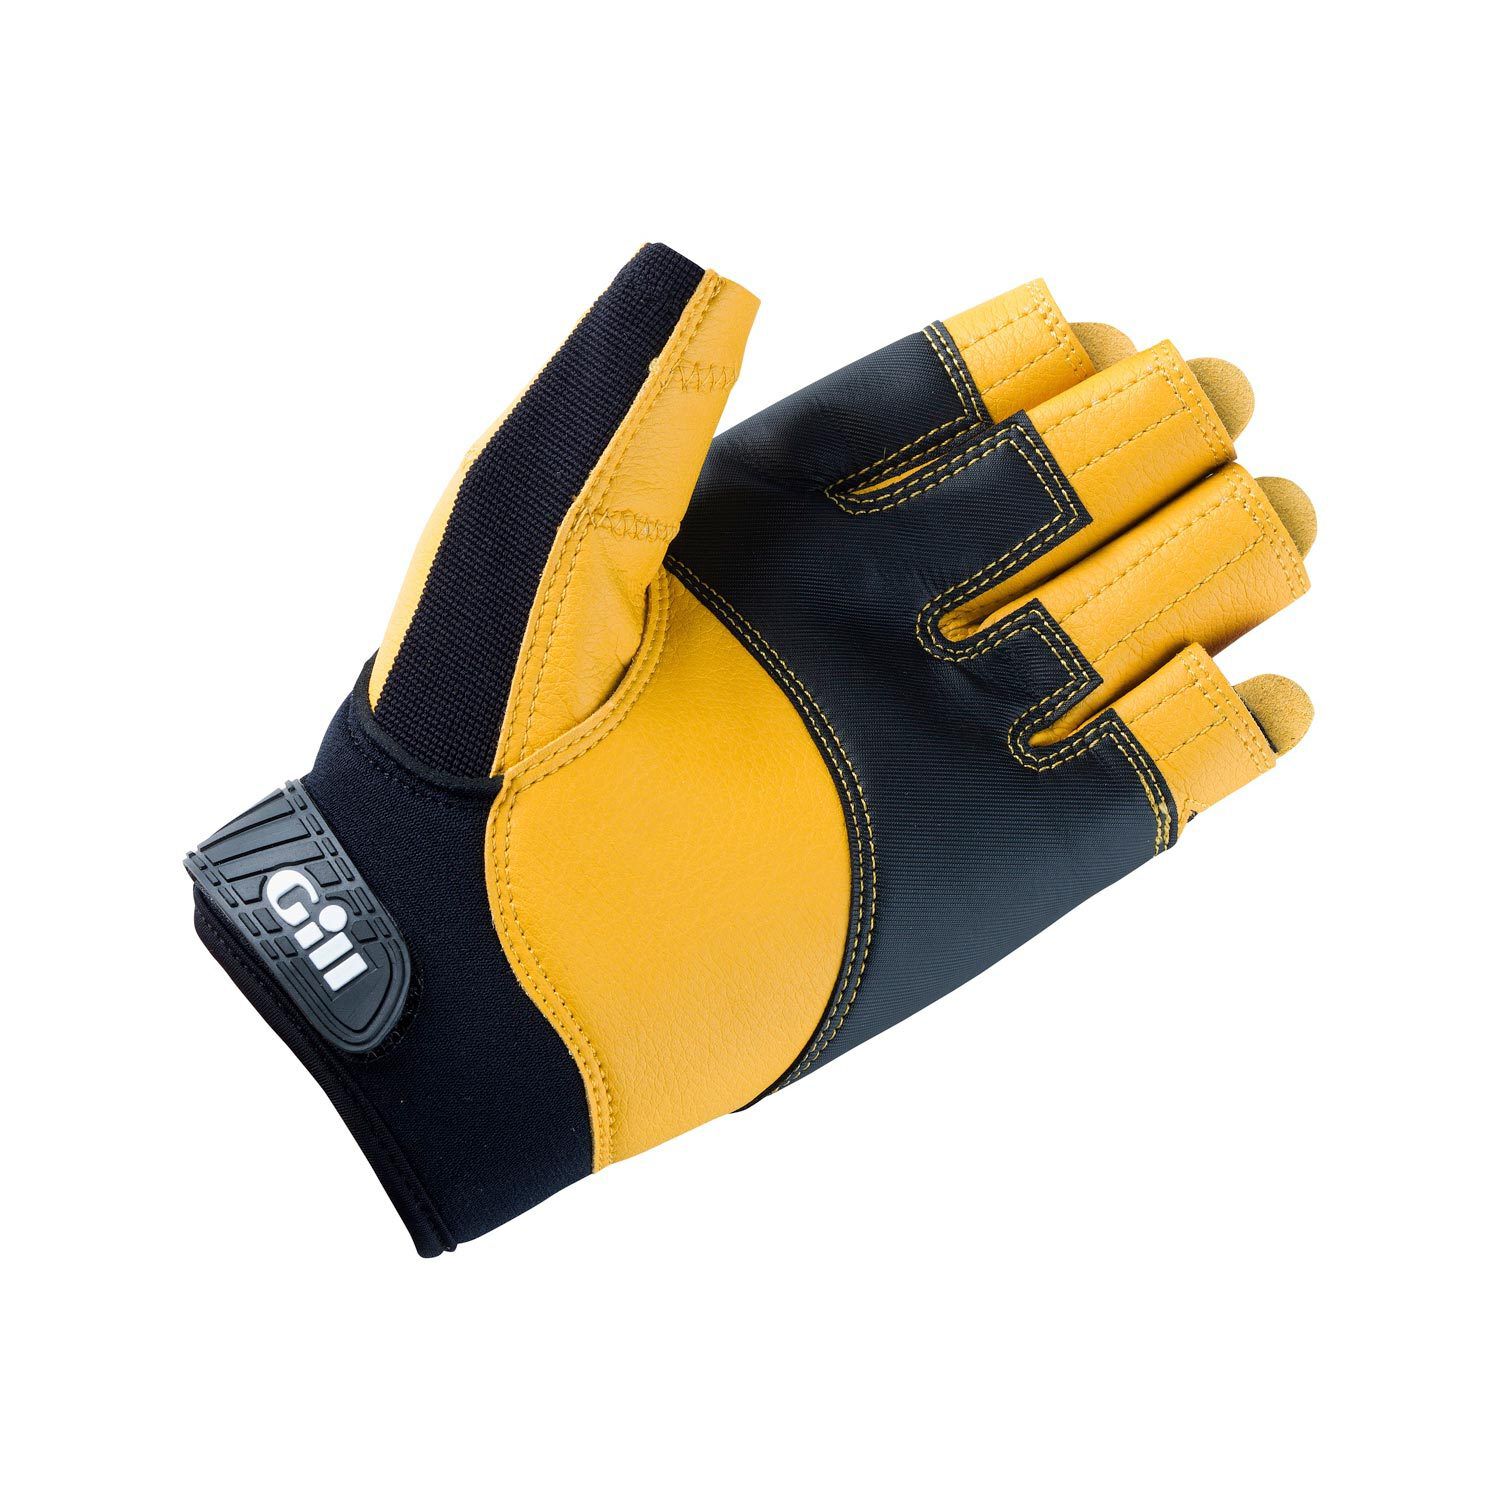 GILL 7442 Pro Sailing Gloves EXTRA LARGE Short Fingered 